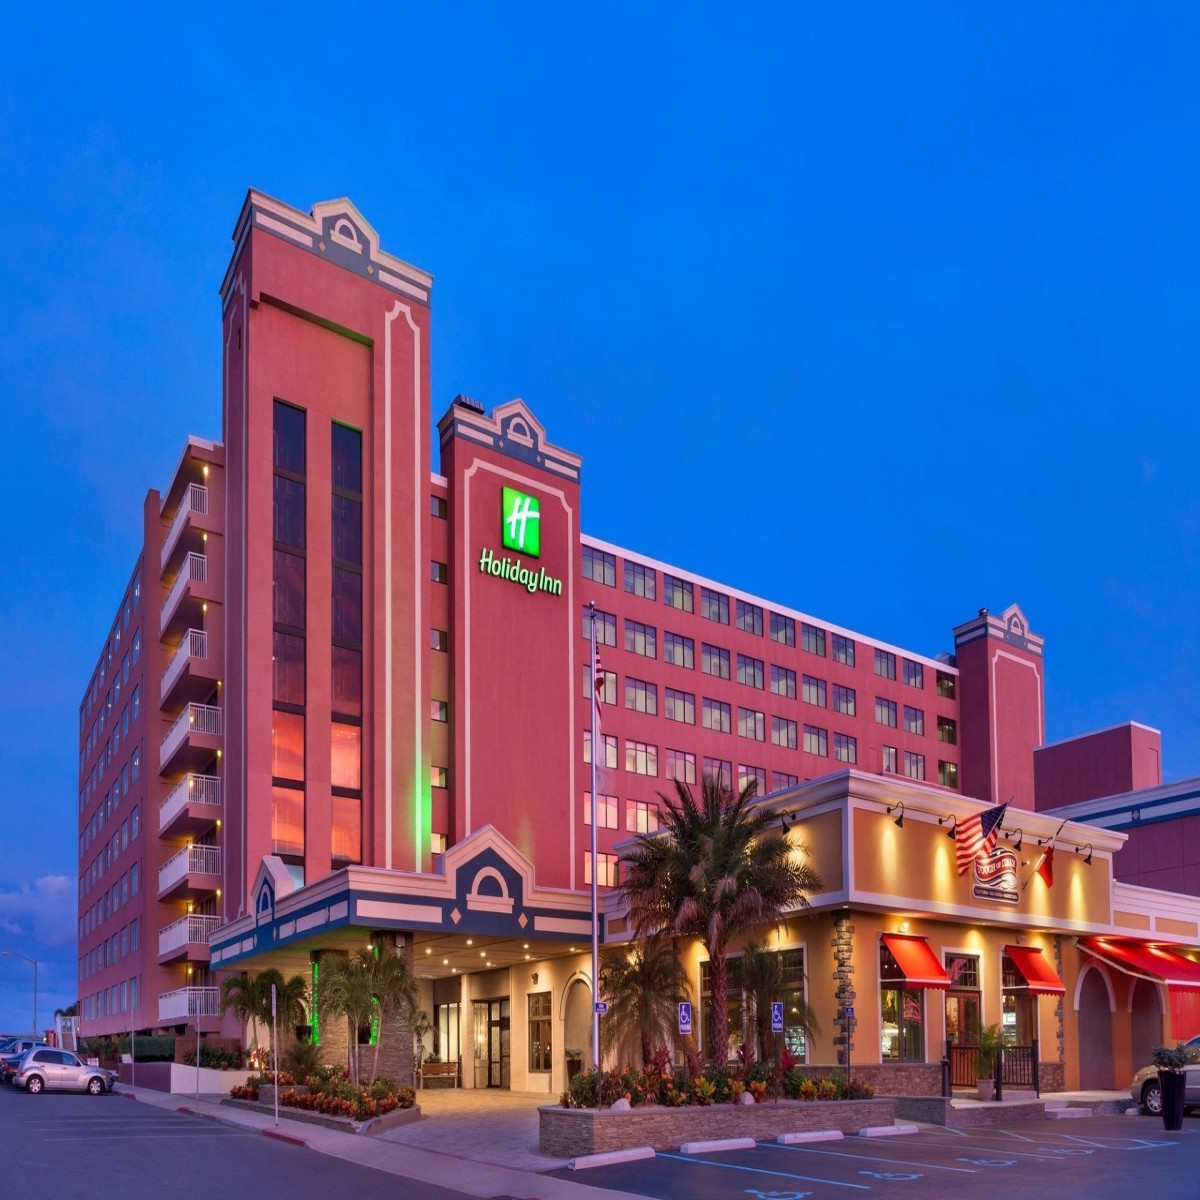 Holiday Inn Ocean City Exterior 981790 